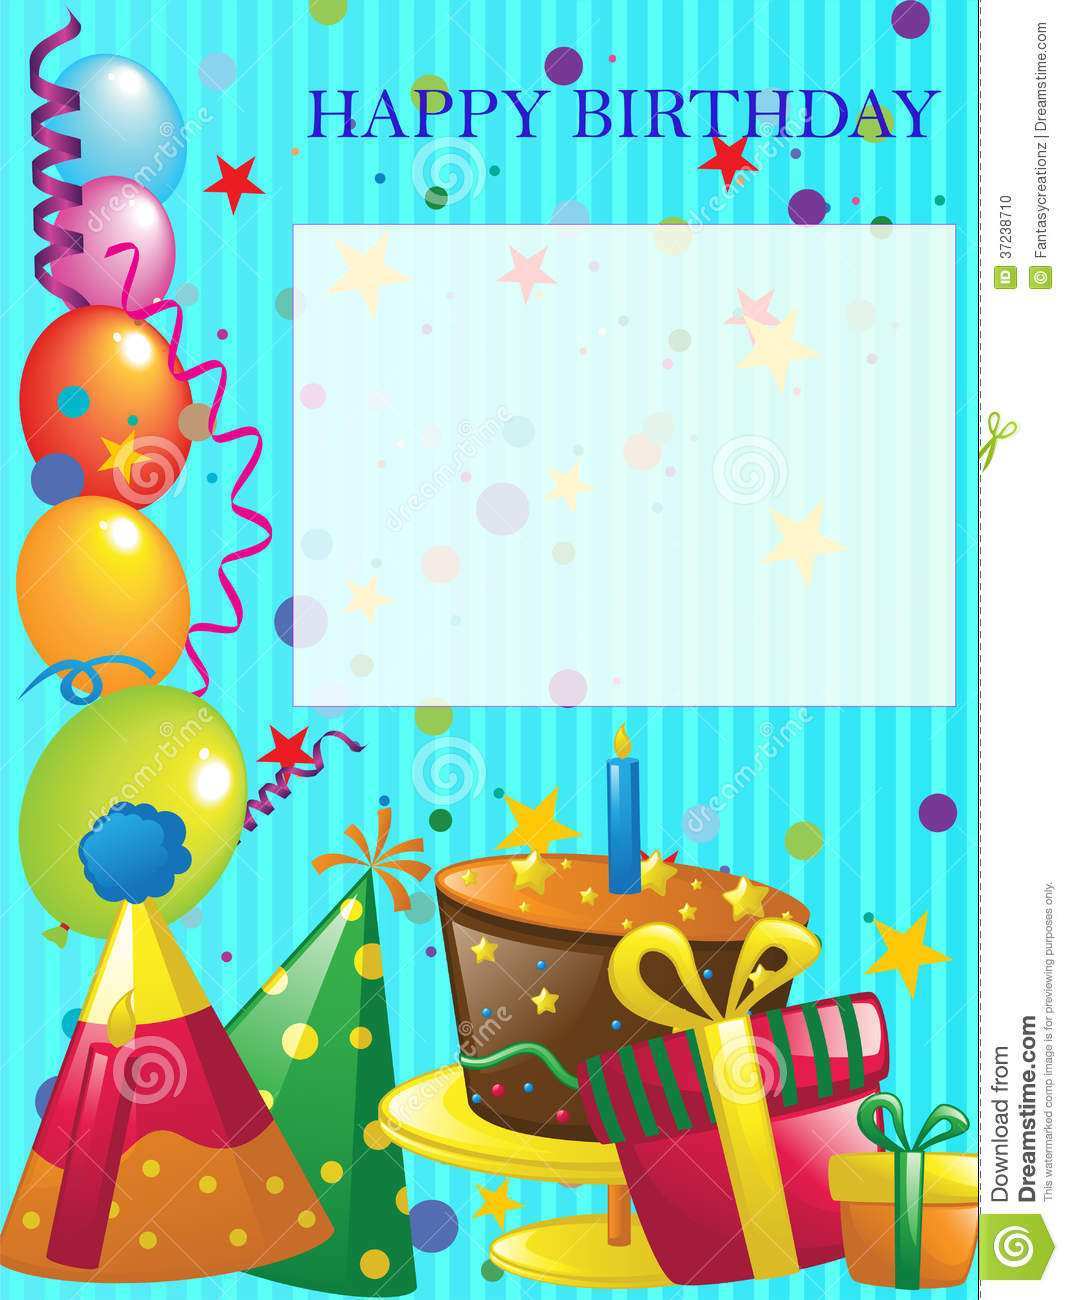 61 How To Create Birthday Invitation Background Designs PSD File by Birthday Invitation Background Designs